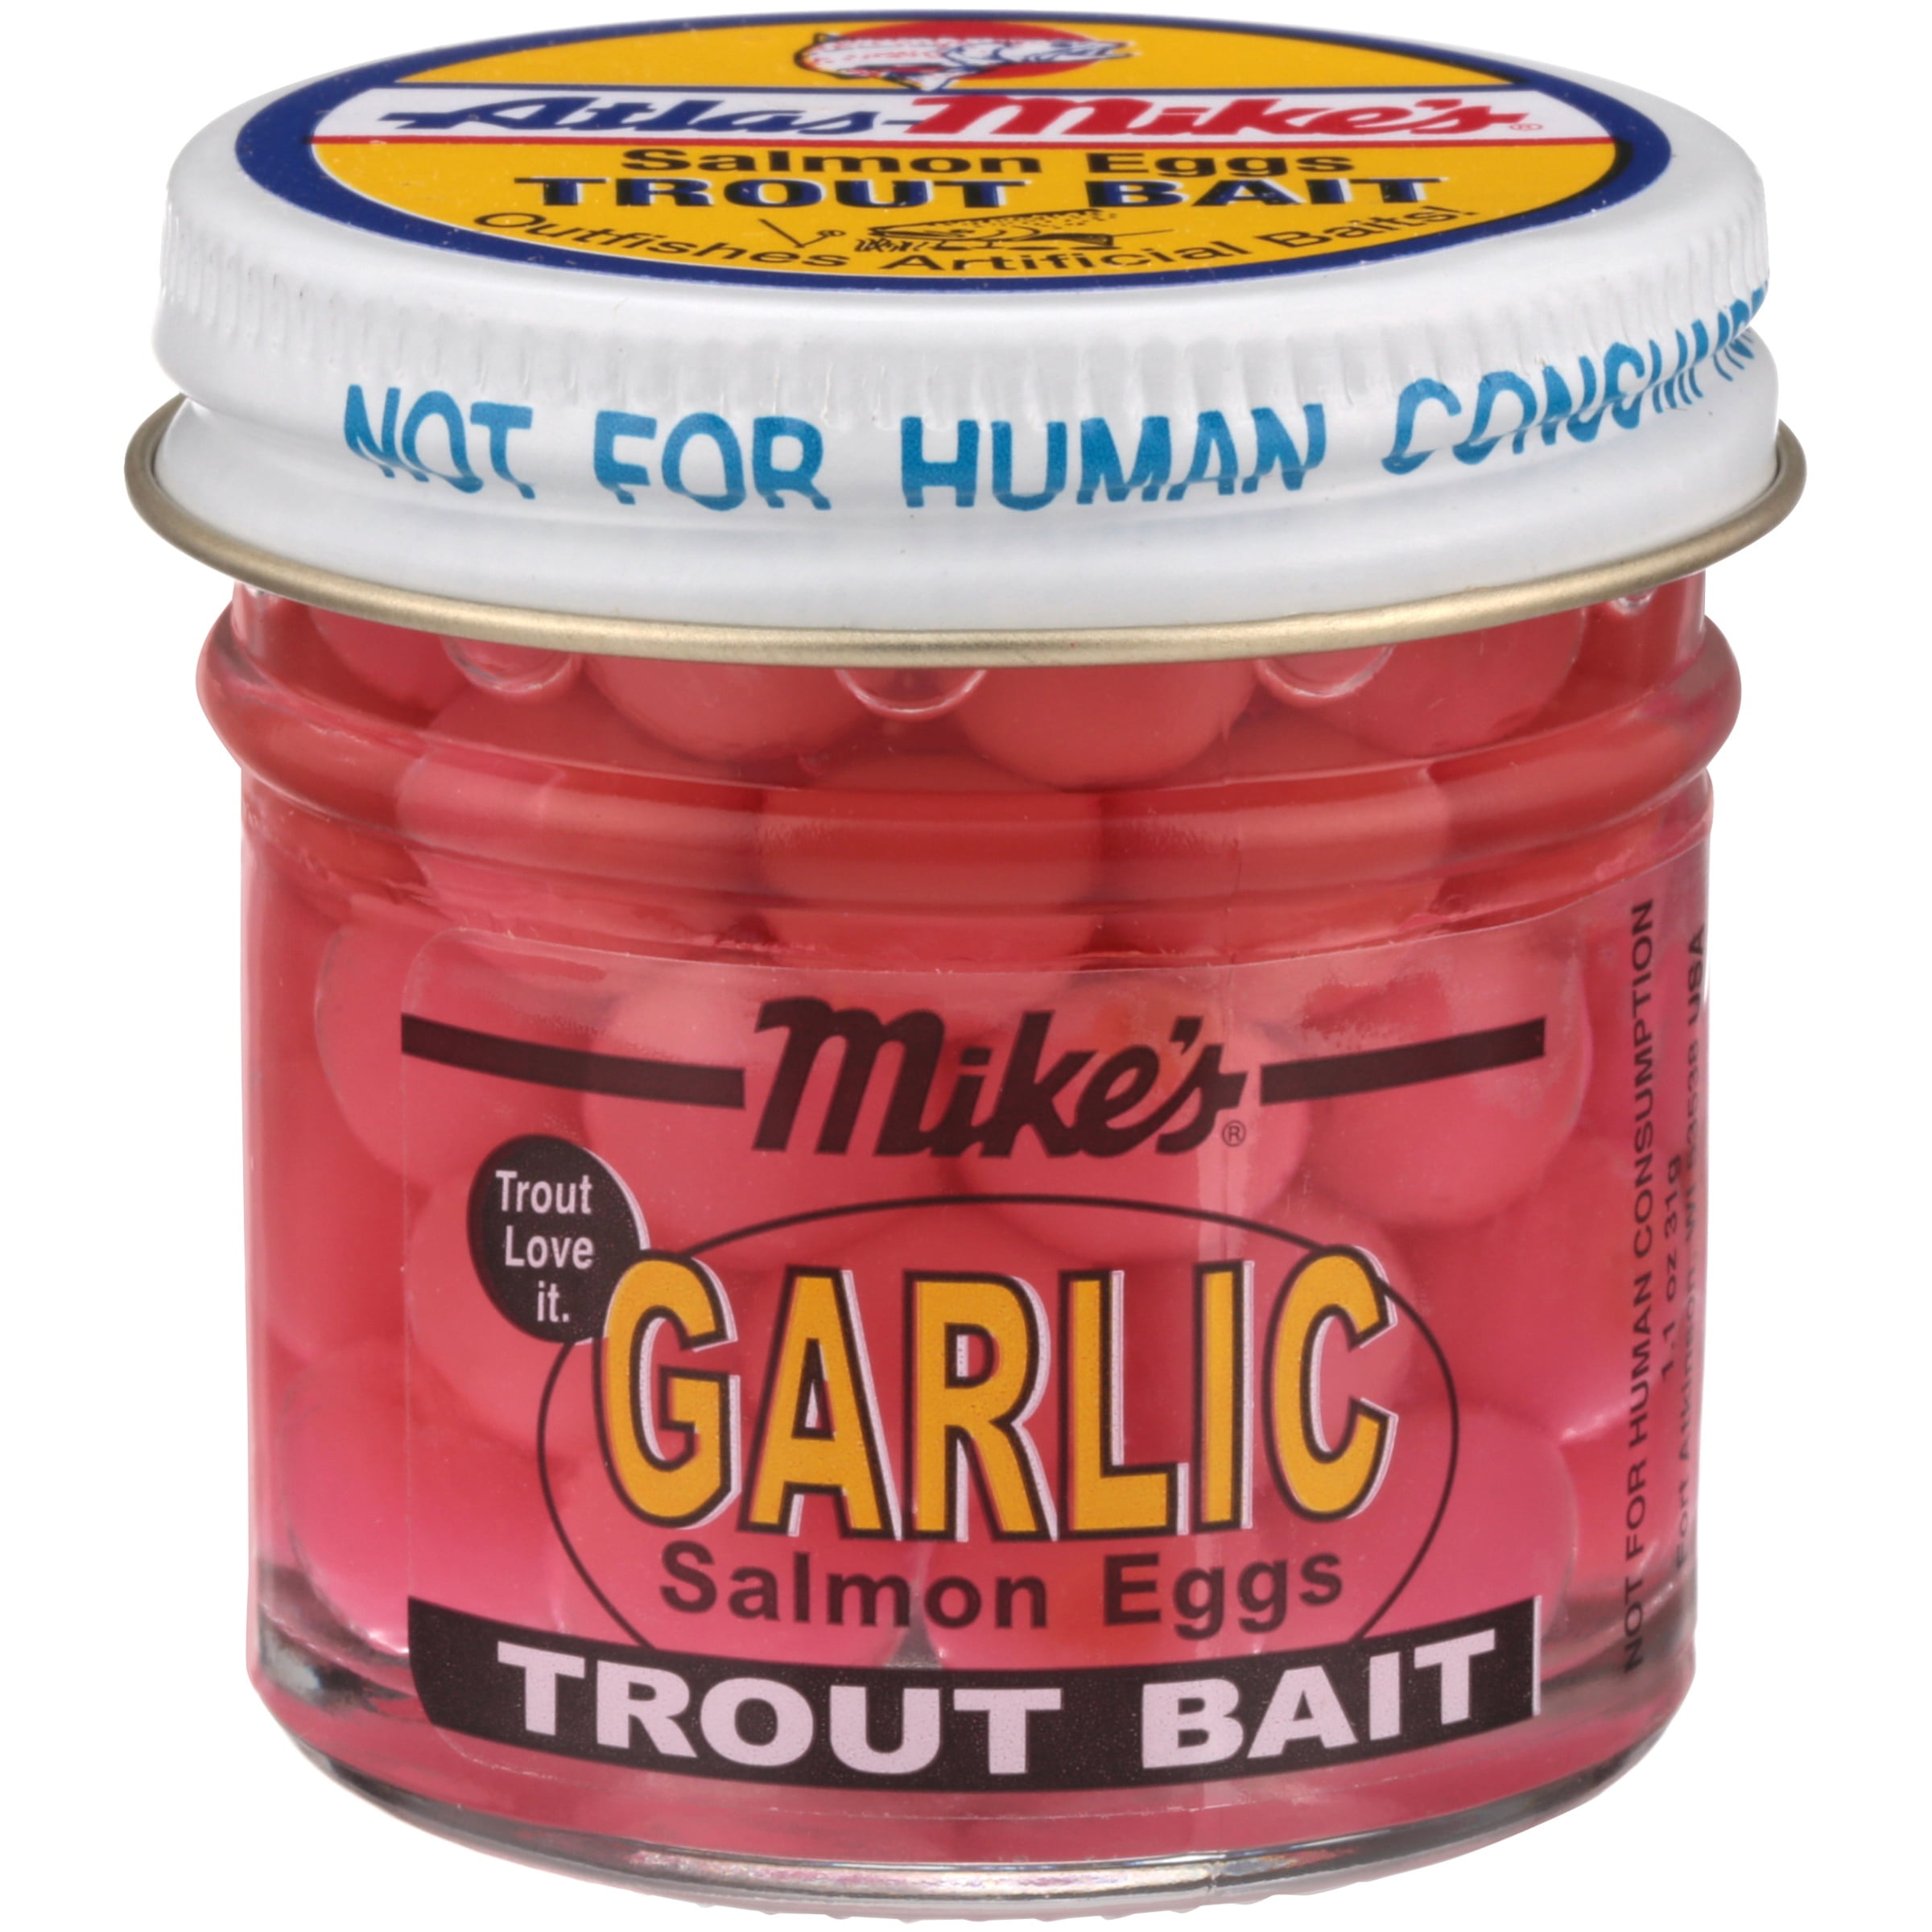 Atlas Mike's® Cheese Yellow Salmon Eggs Trout Bait 1.1 oz. Jar